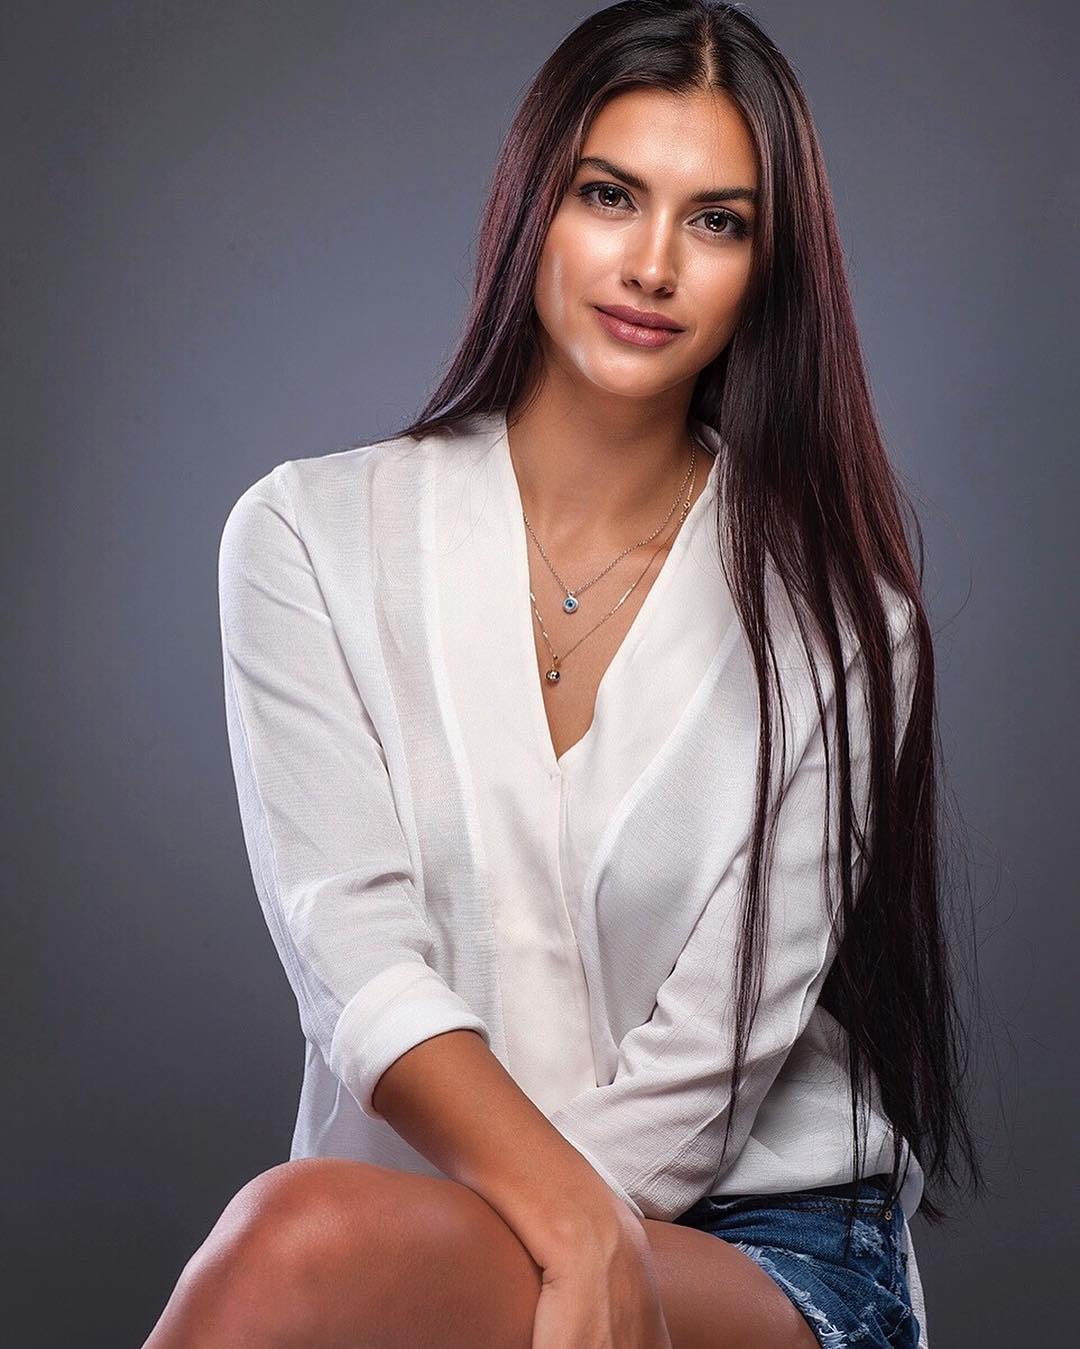 Miss Universe Turkey 2016  Tansu Sila Cakir / Tansu Sıla Çakır